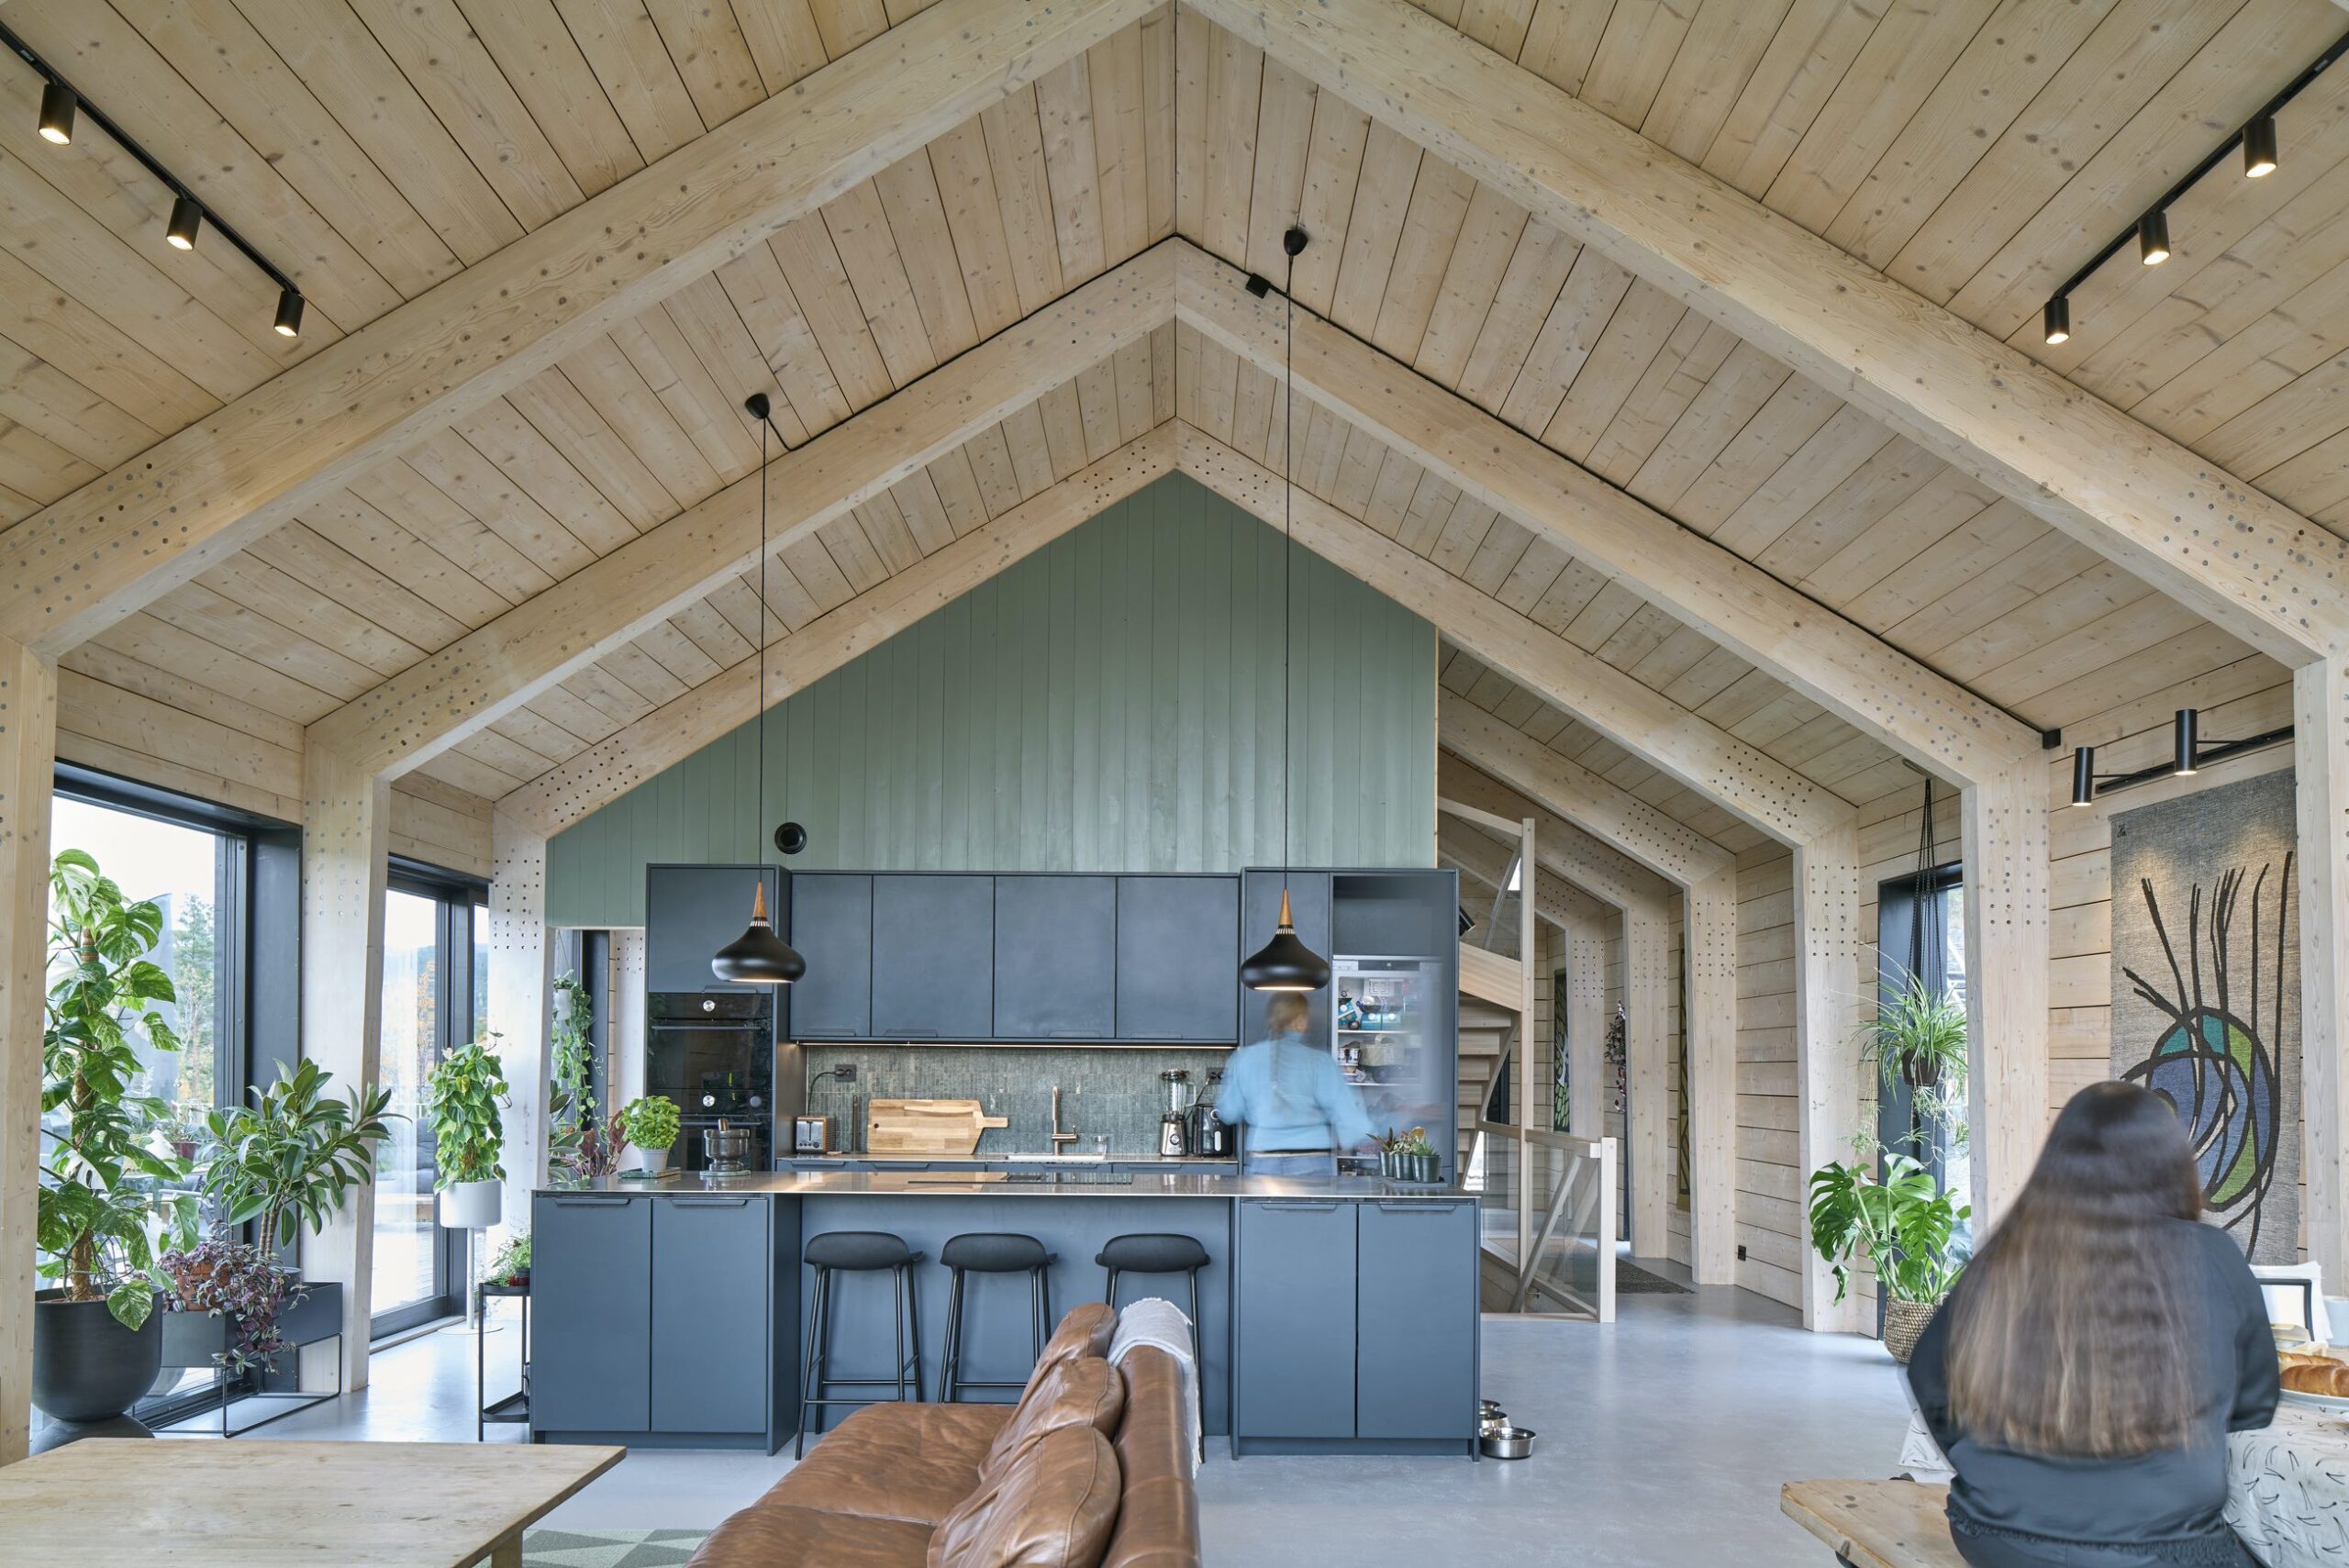 House Dokka Snohetta Norway architecture interior wooden roof kitchen